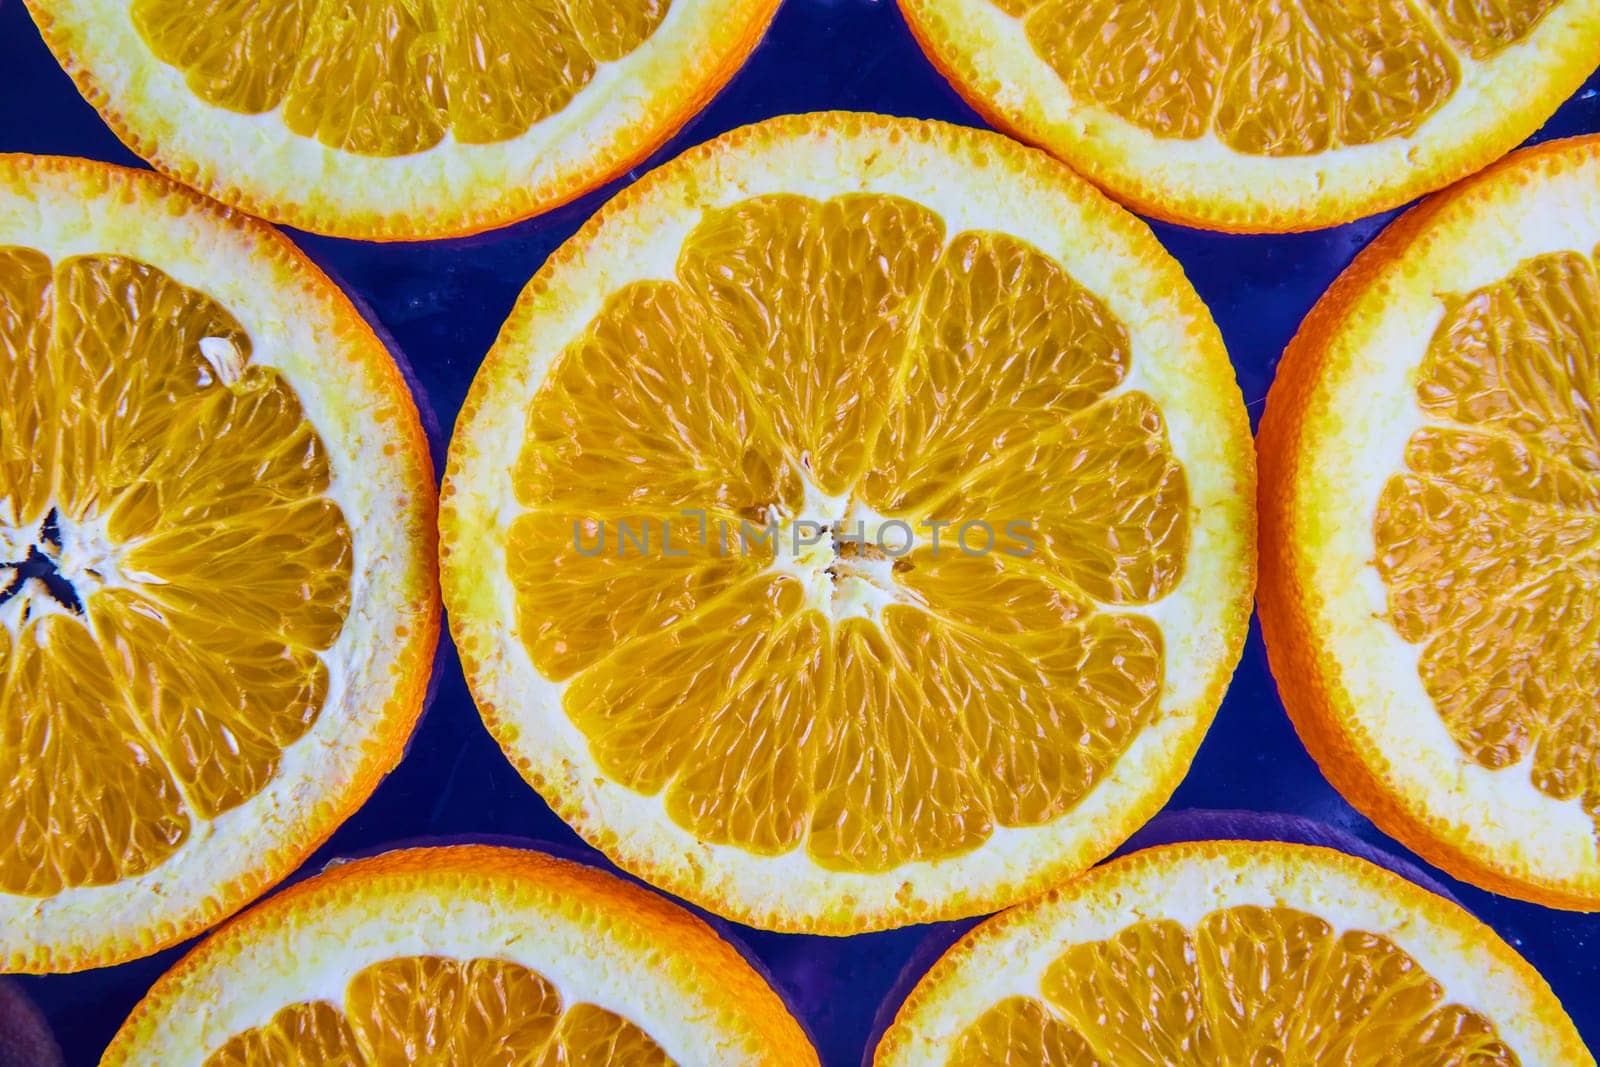 Image of Macro of orange slices with seeds on navy blue background